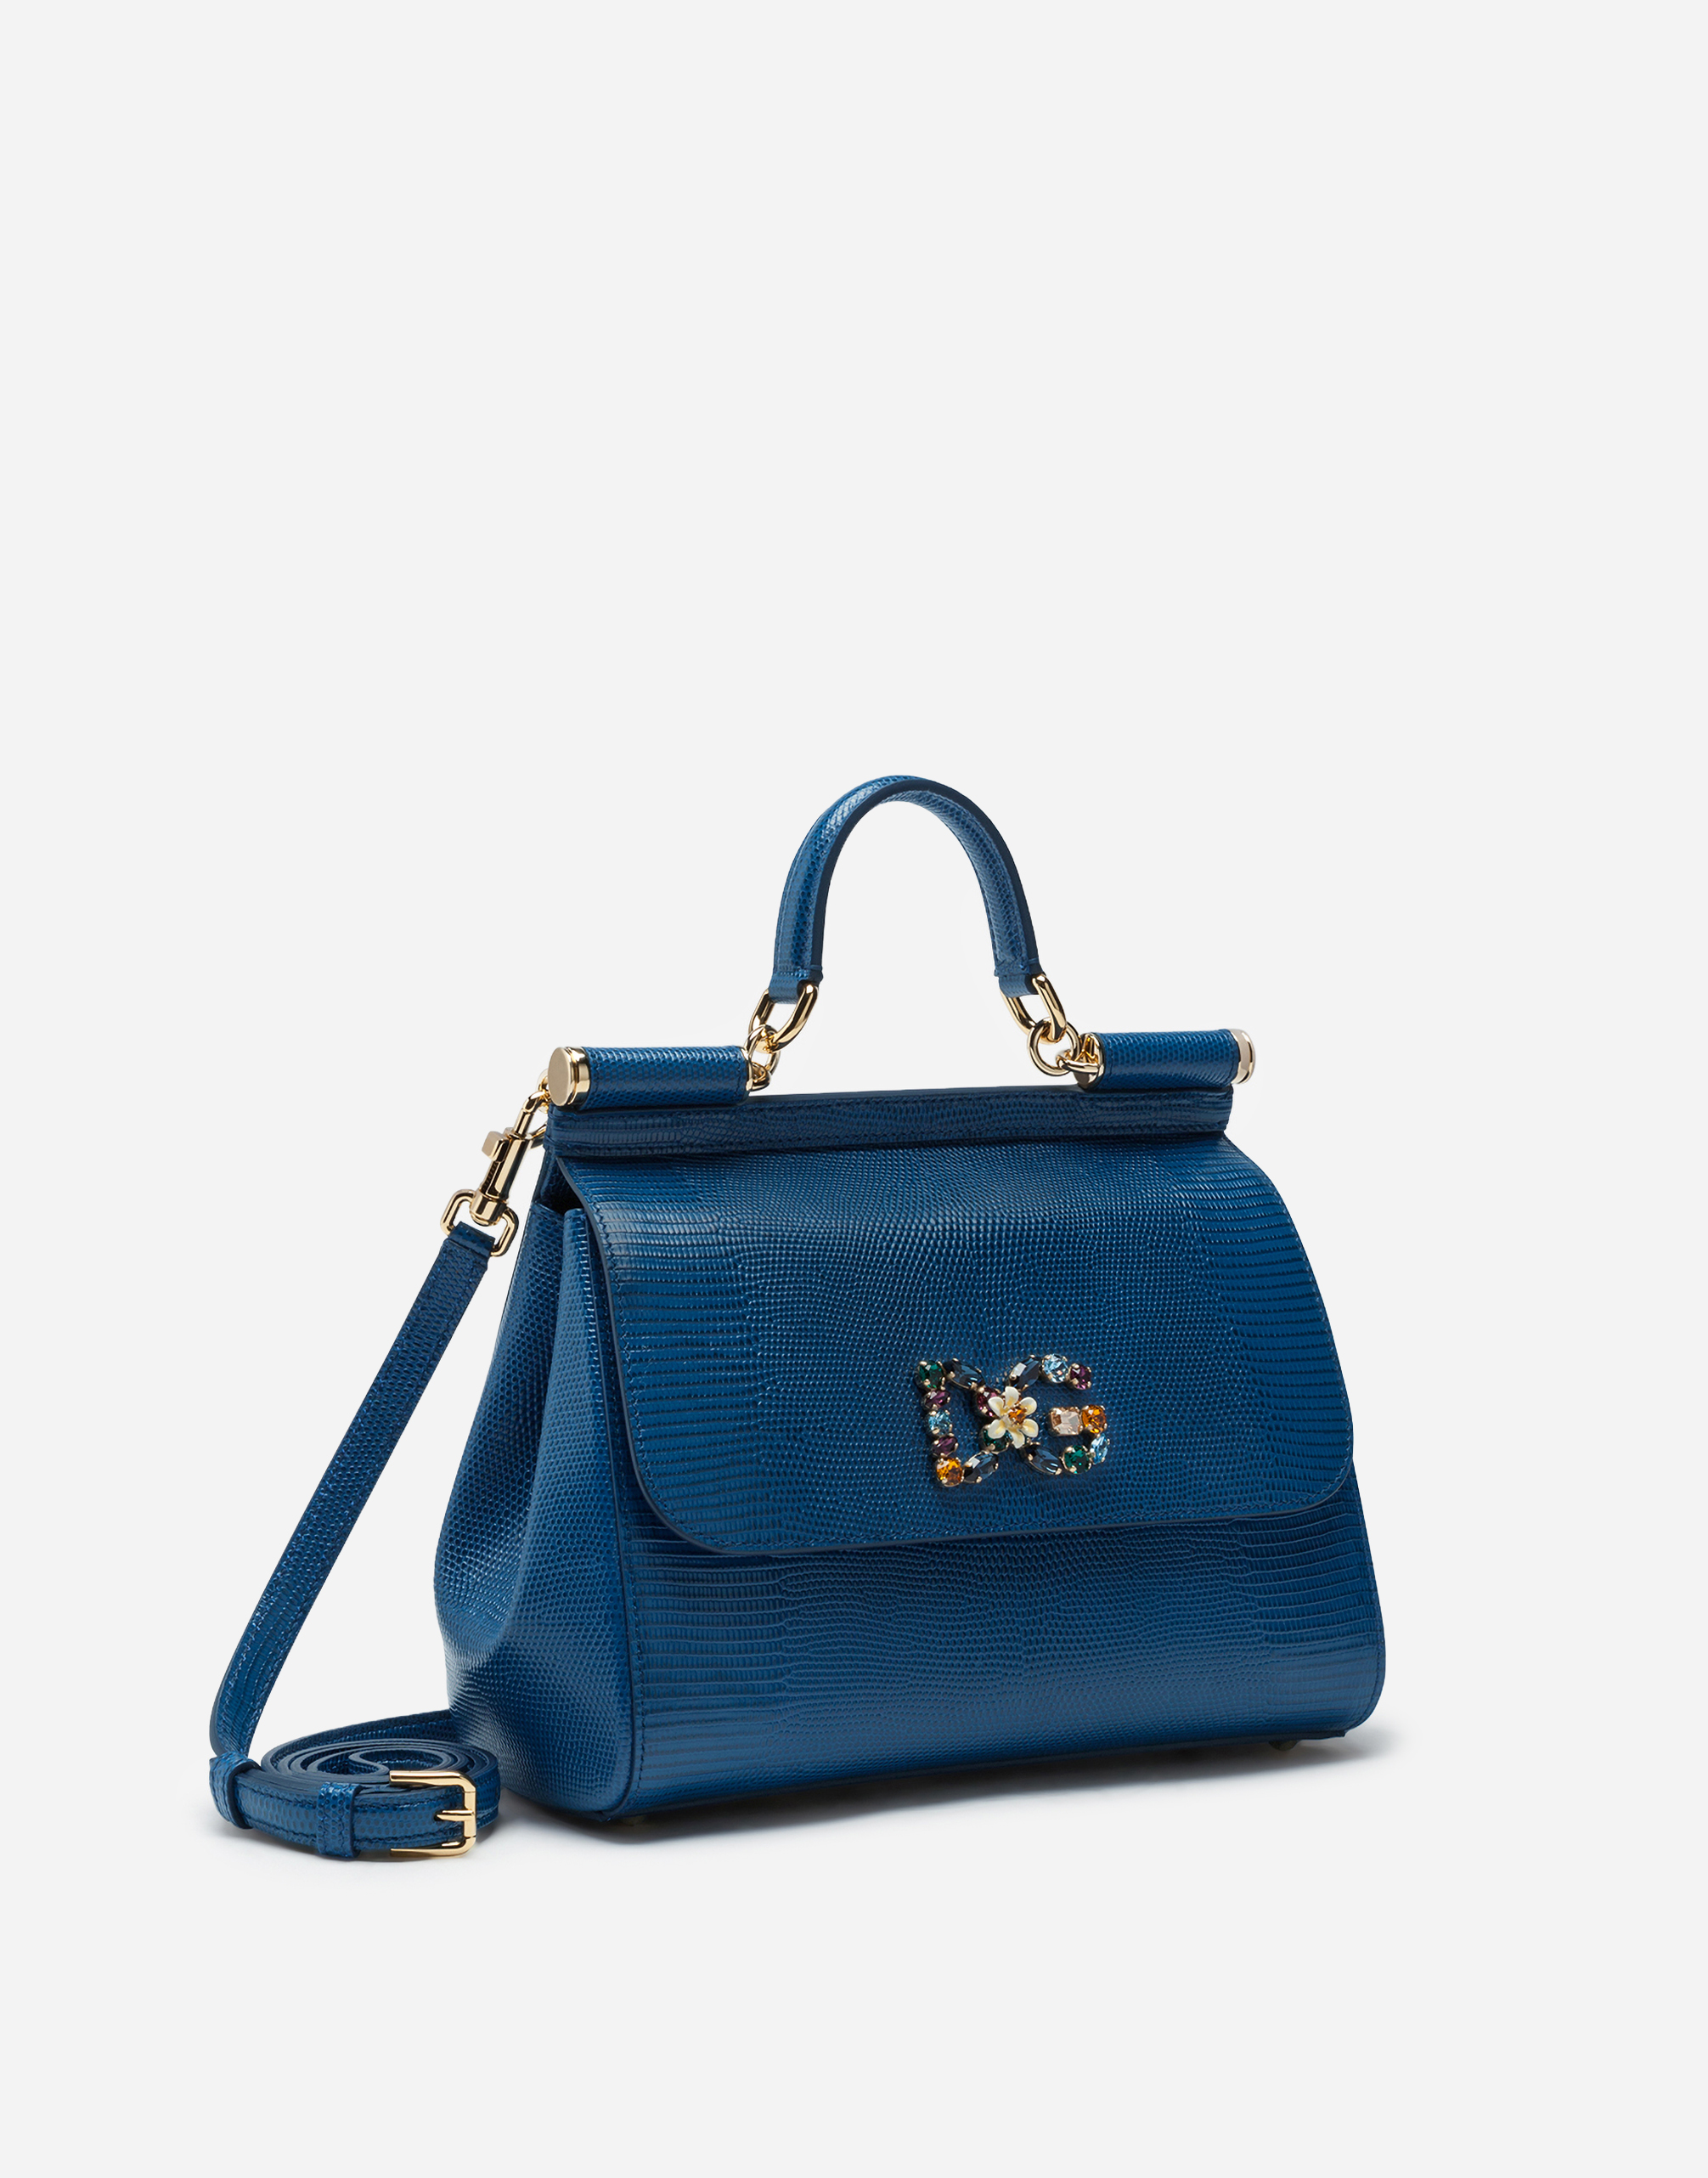 Sicily Bag Collection for Women | Dolce&Gabbana - MEDIUM IGUANA PRINT ...